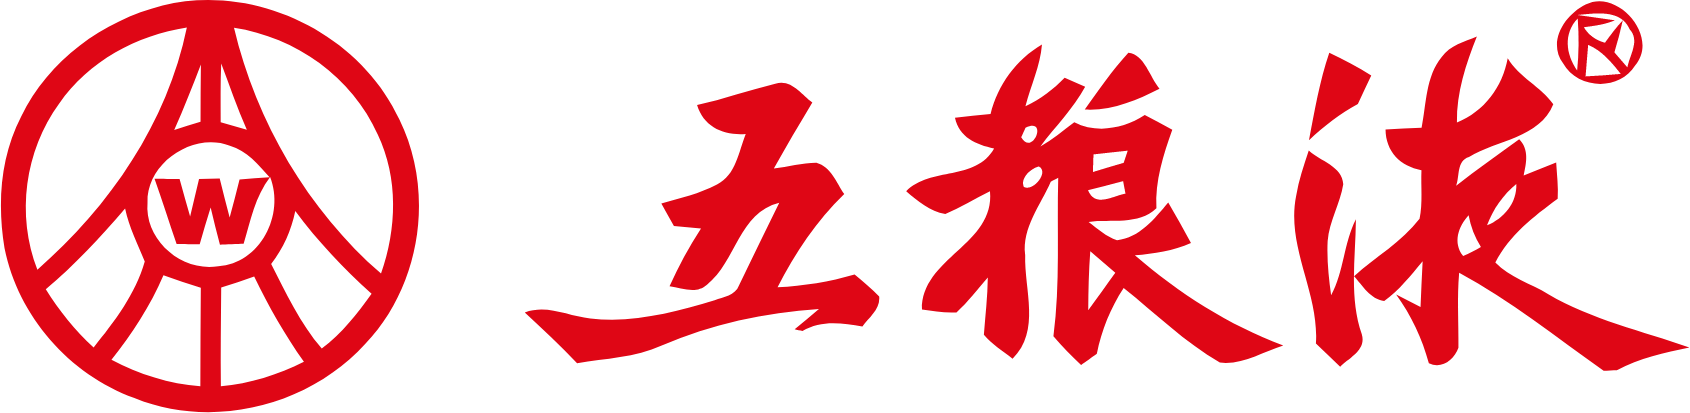 Wuliangye Yibin logo large (transparent PNG)